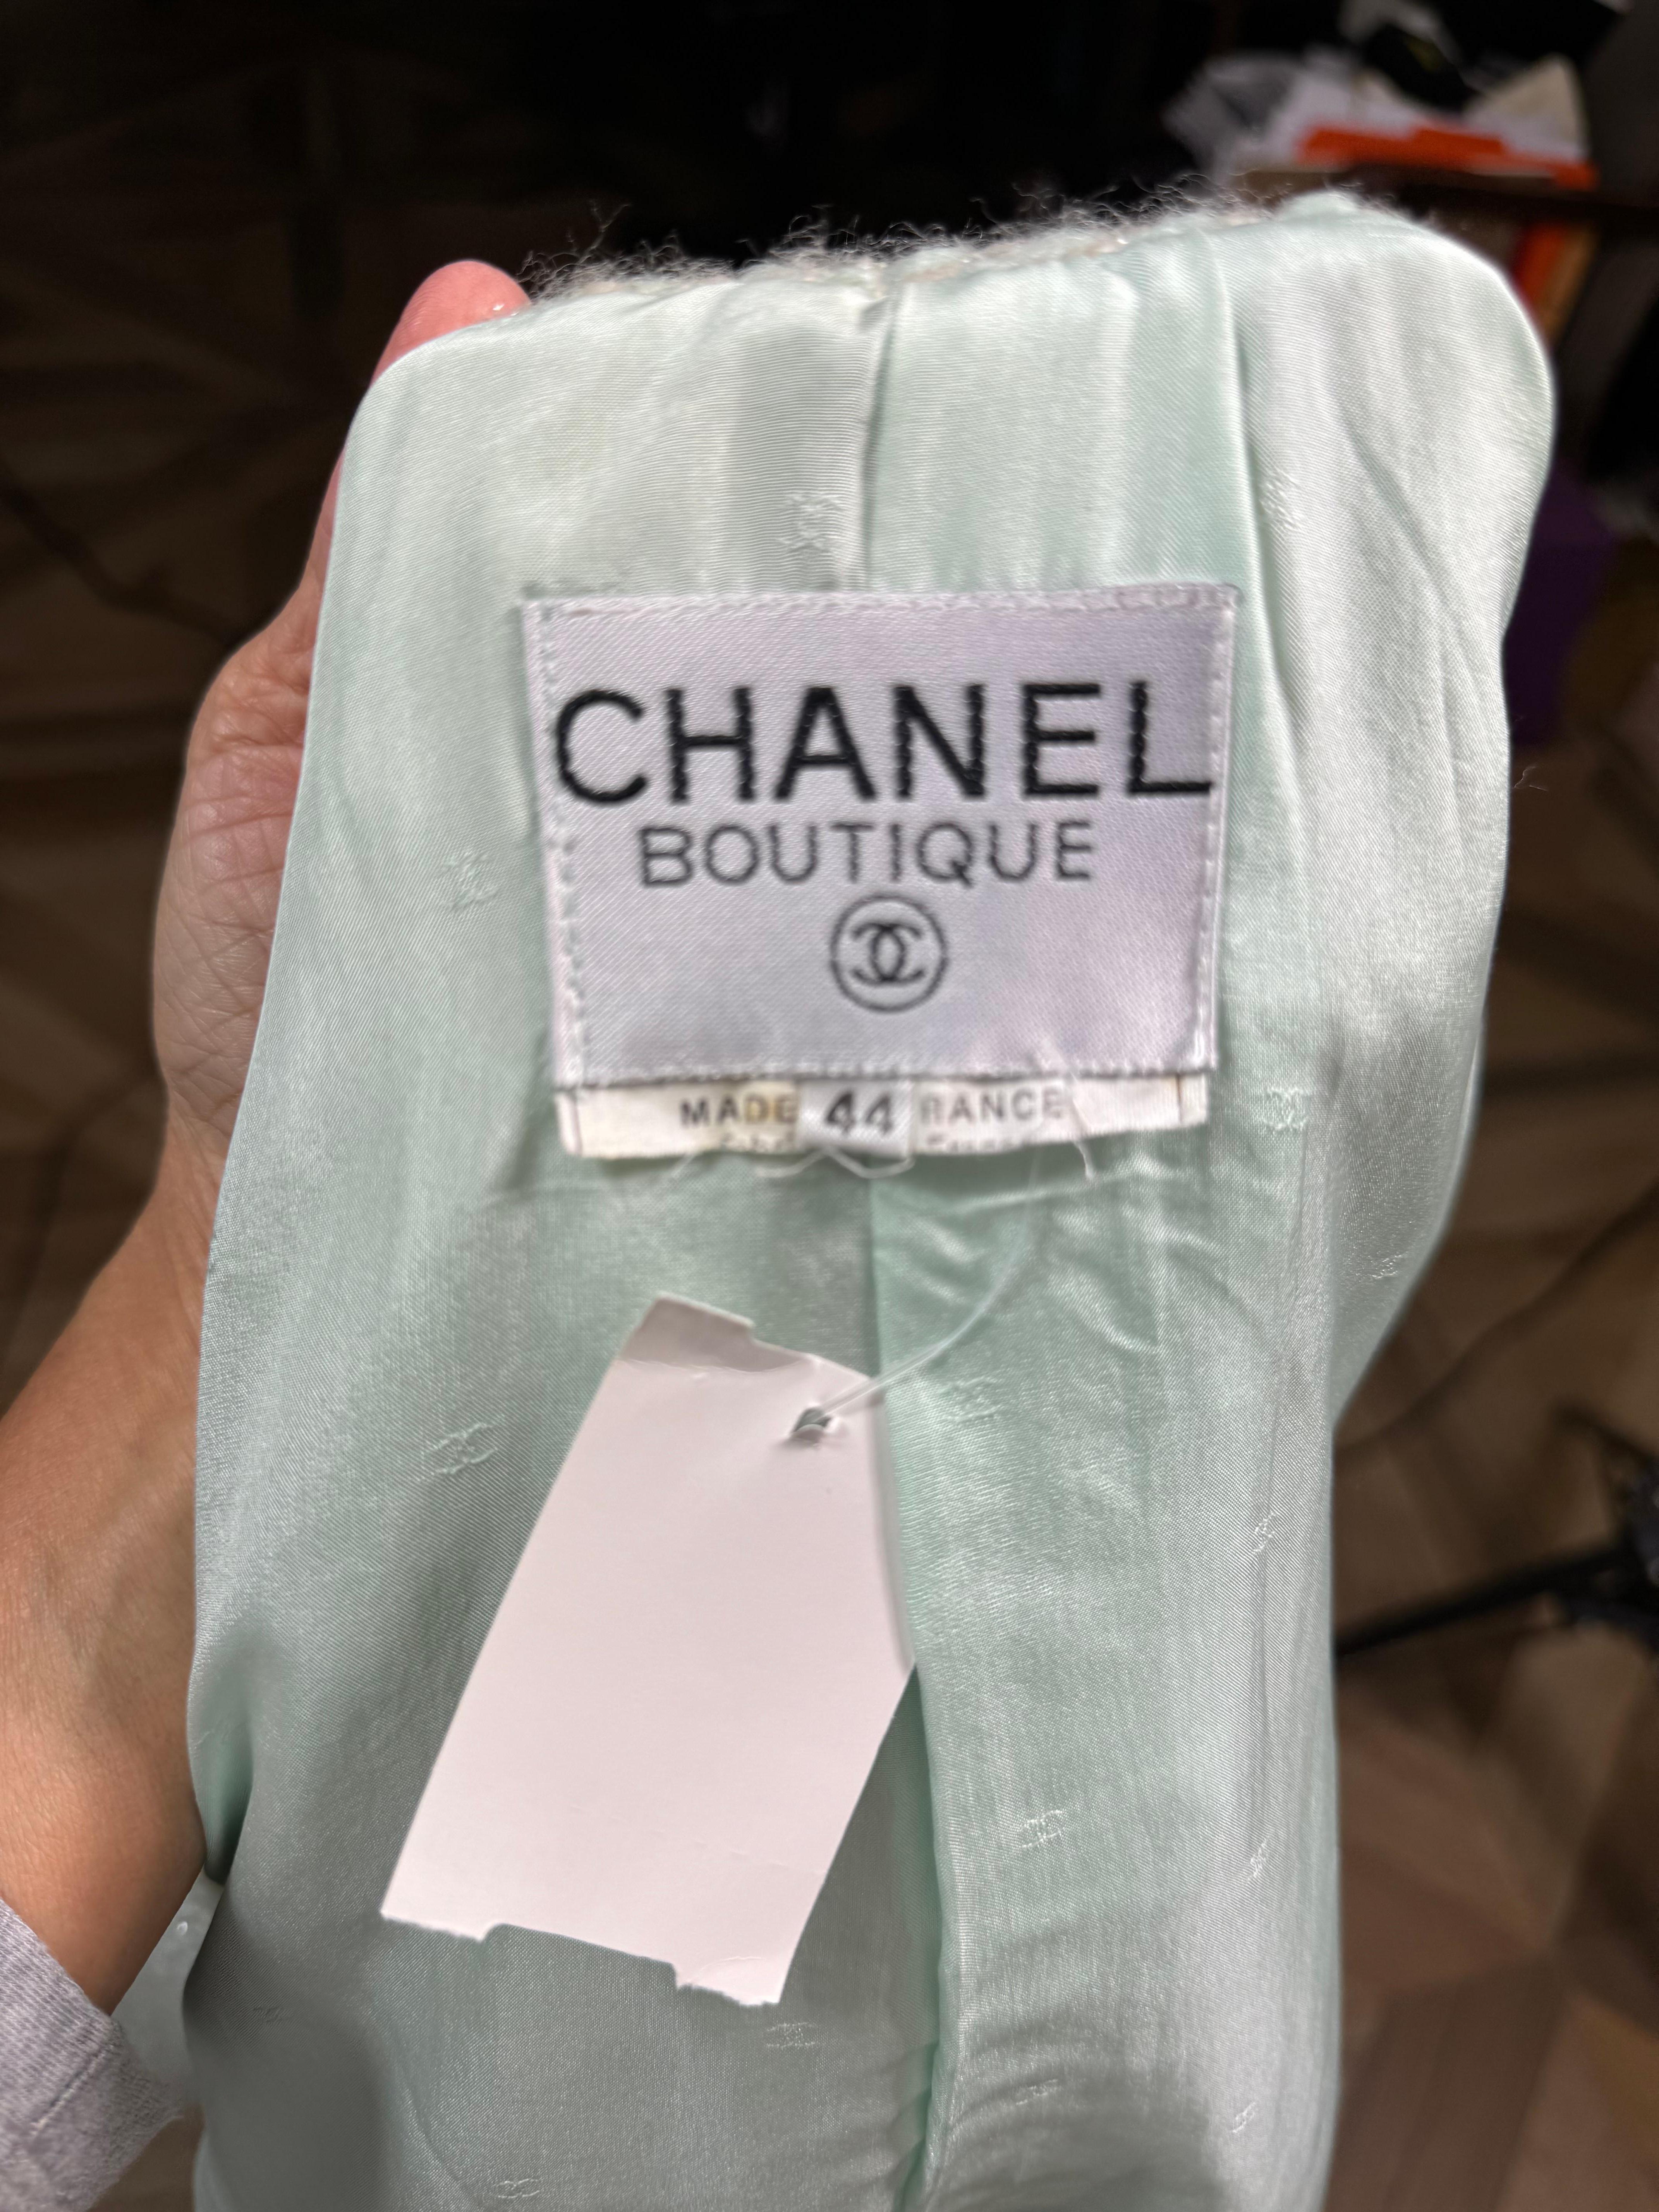 Chanel Boutique Runway printemps 1992 - Veste en tweed ivoire et turq en vente 8